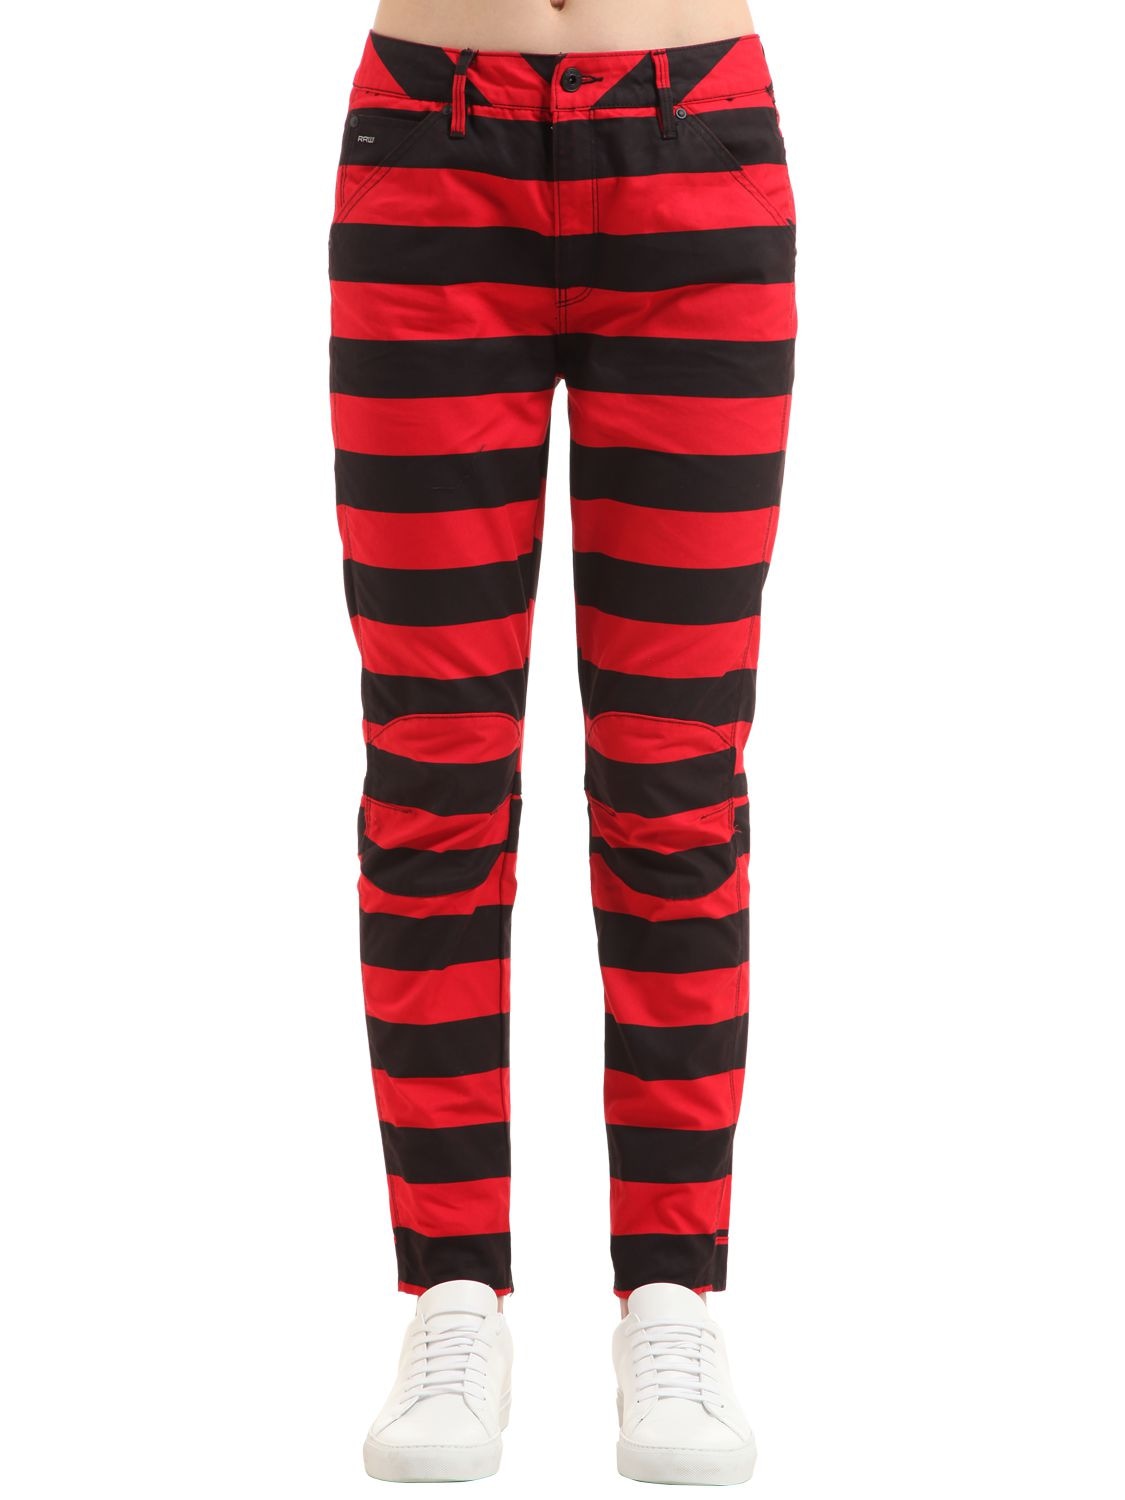 G-star By Pharrell Williams Elwood Prison Stripe Denim Jeans In Red/black